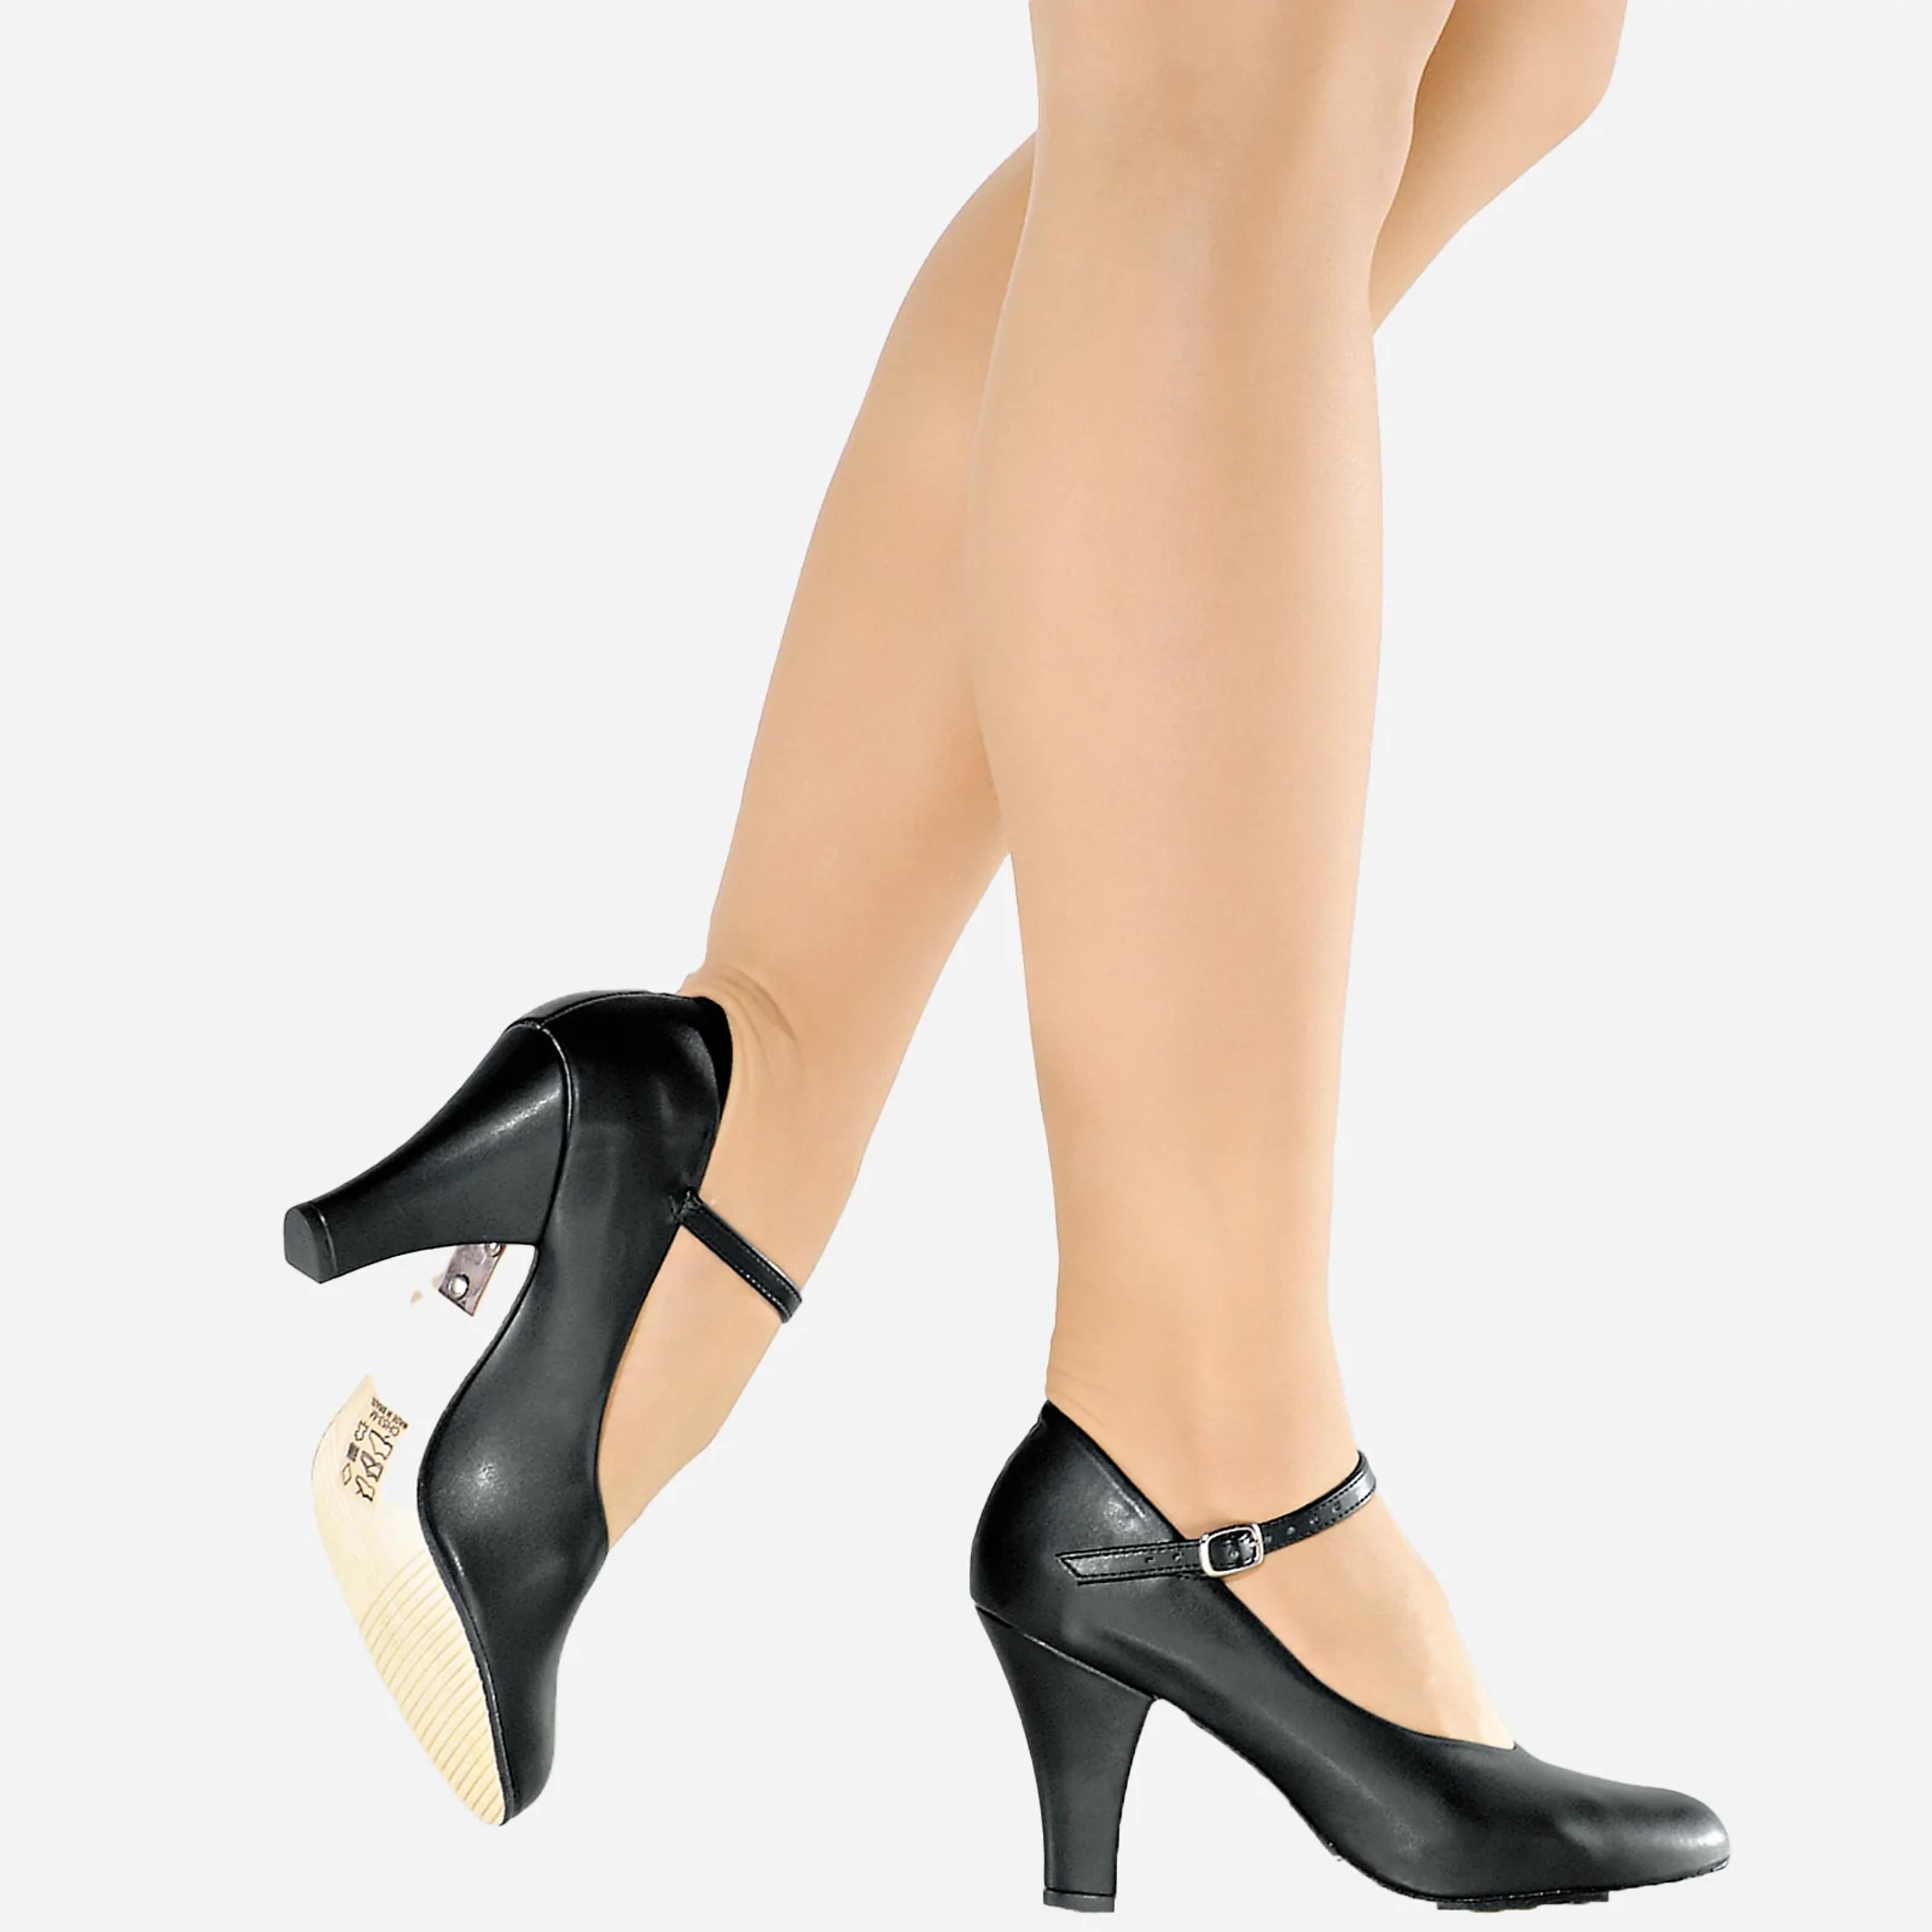 Irene Tan Nubuck Heels | 2 Inch Heel | Women's Tan Block Heels – Steve  Madden-hkpdtq2012.edu.vn